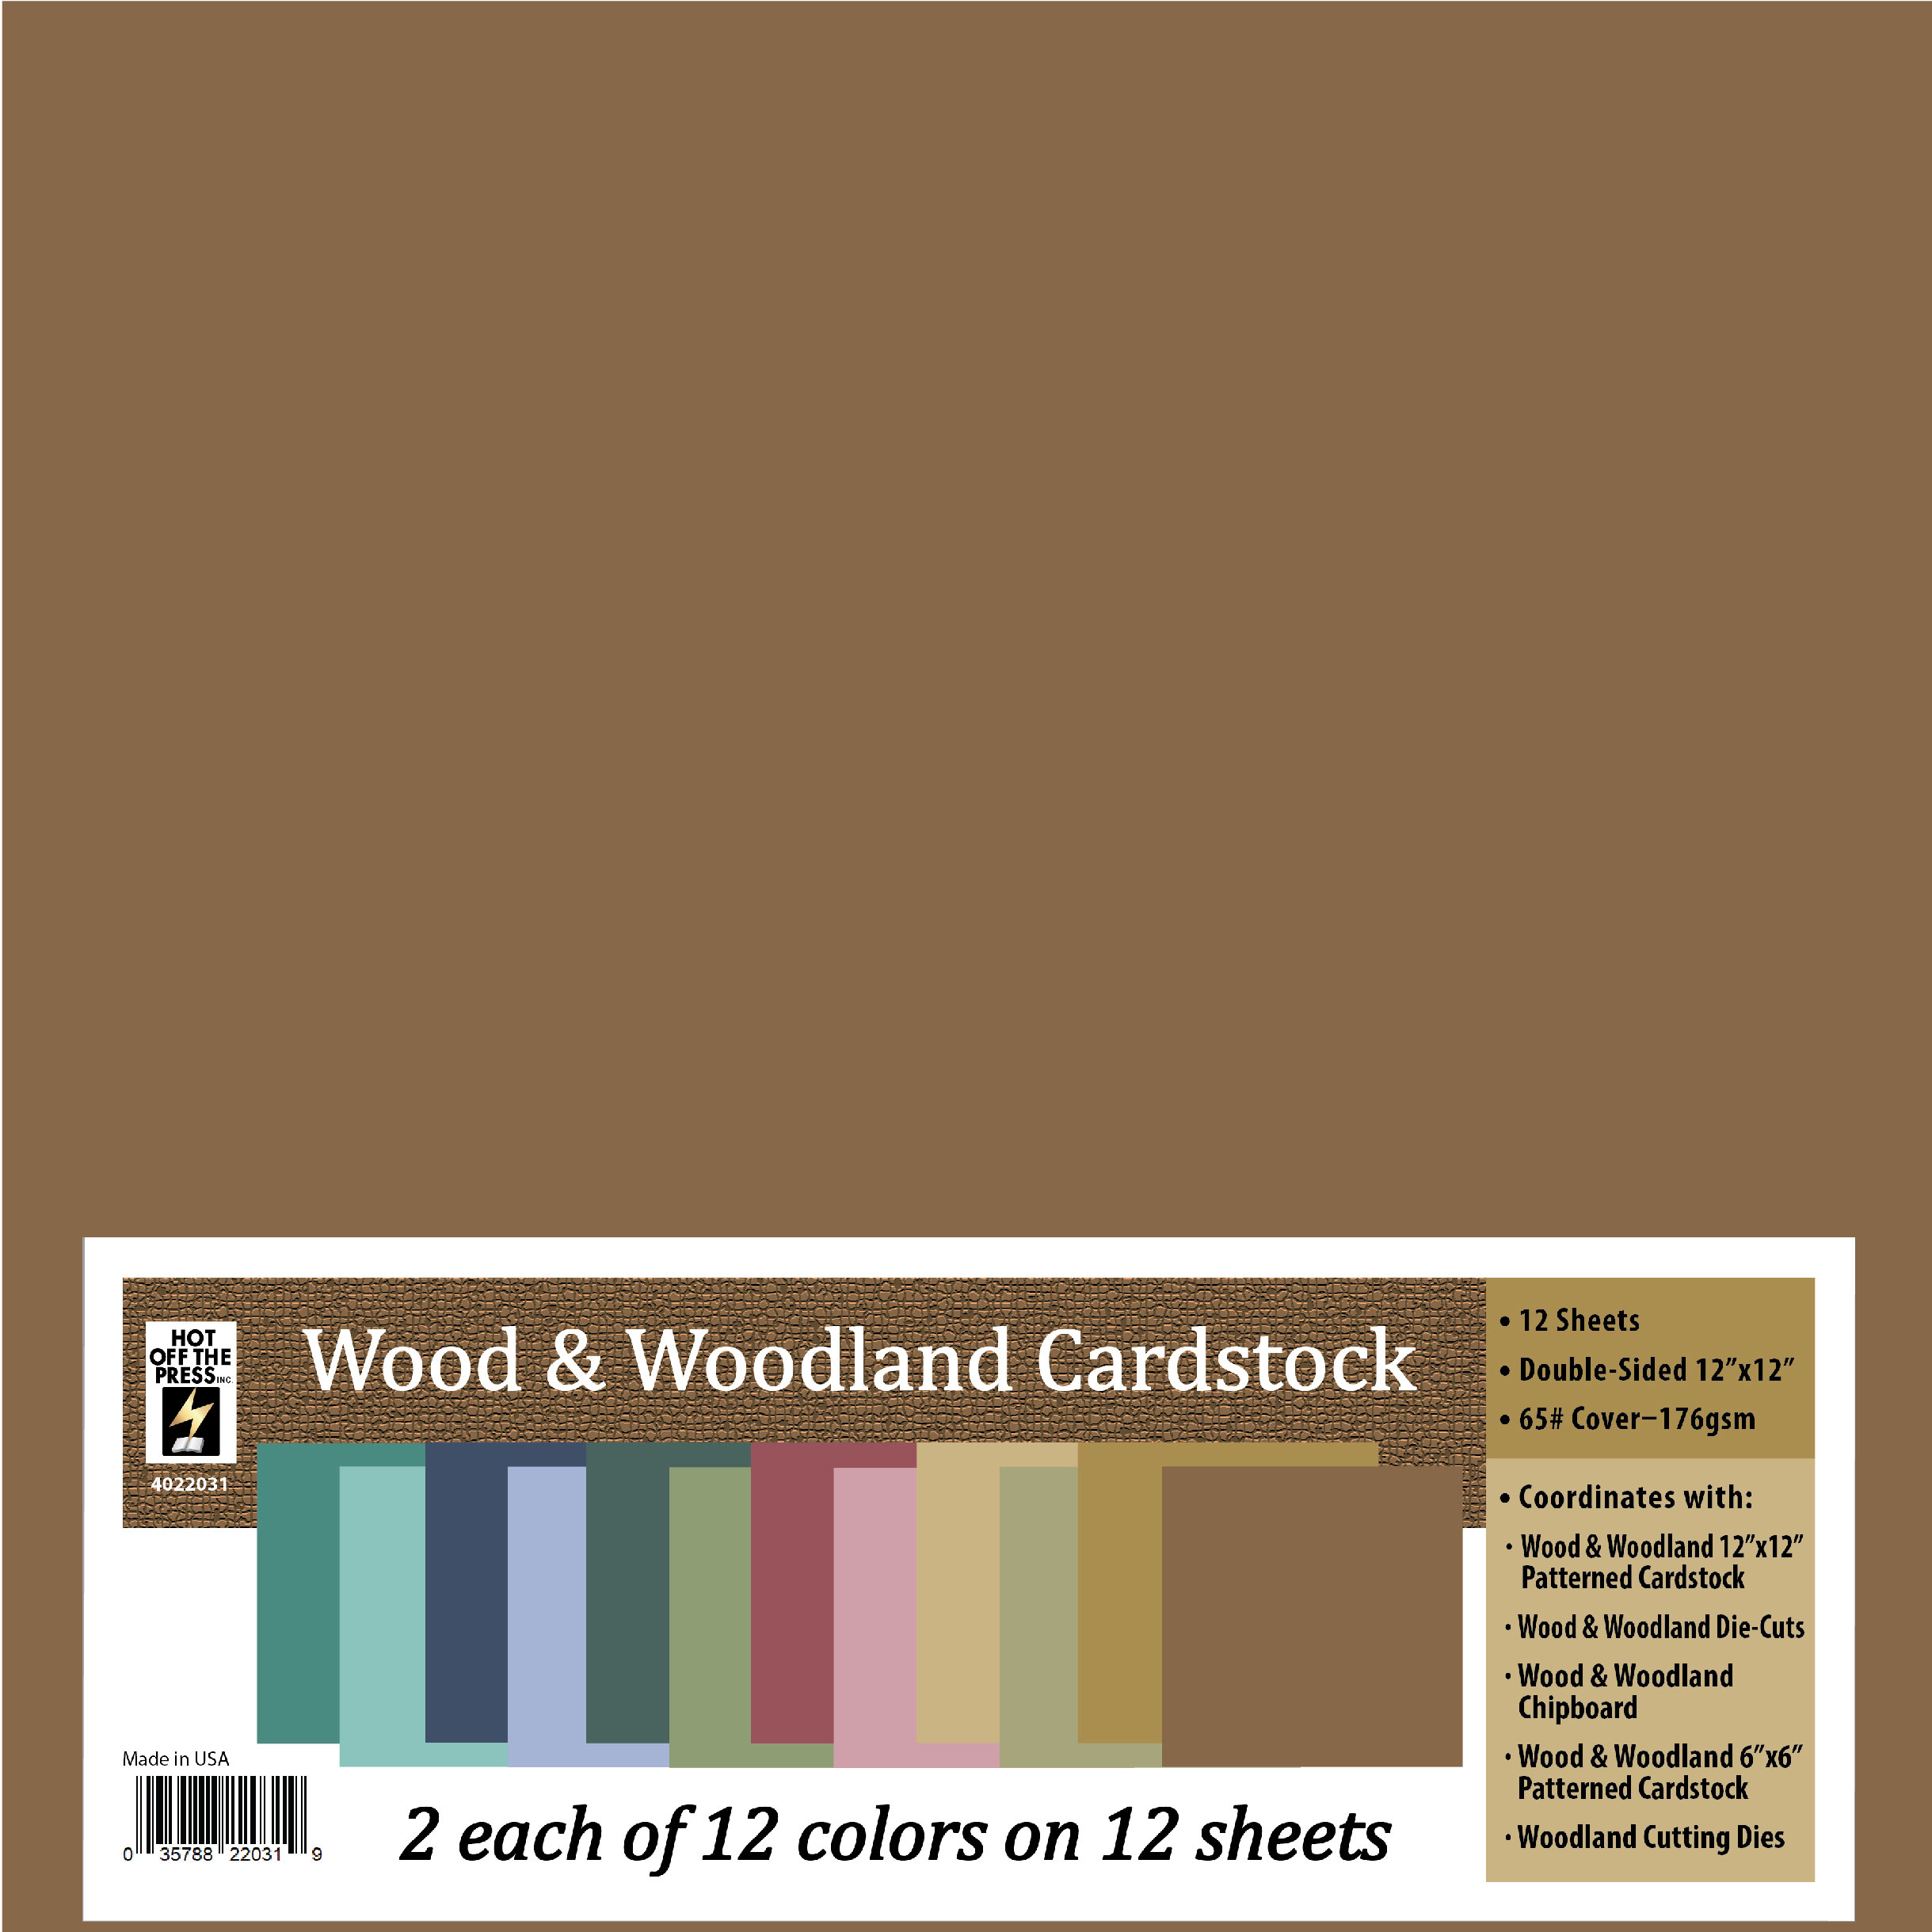 Wood & Woodland 12x12 Solid Cardstock